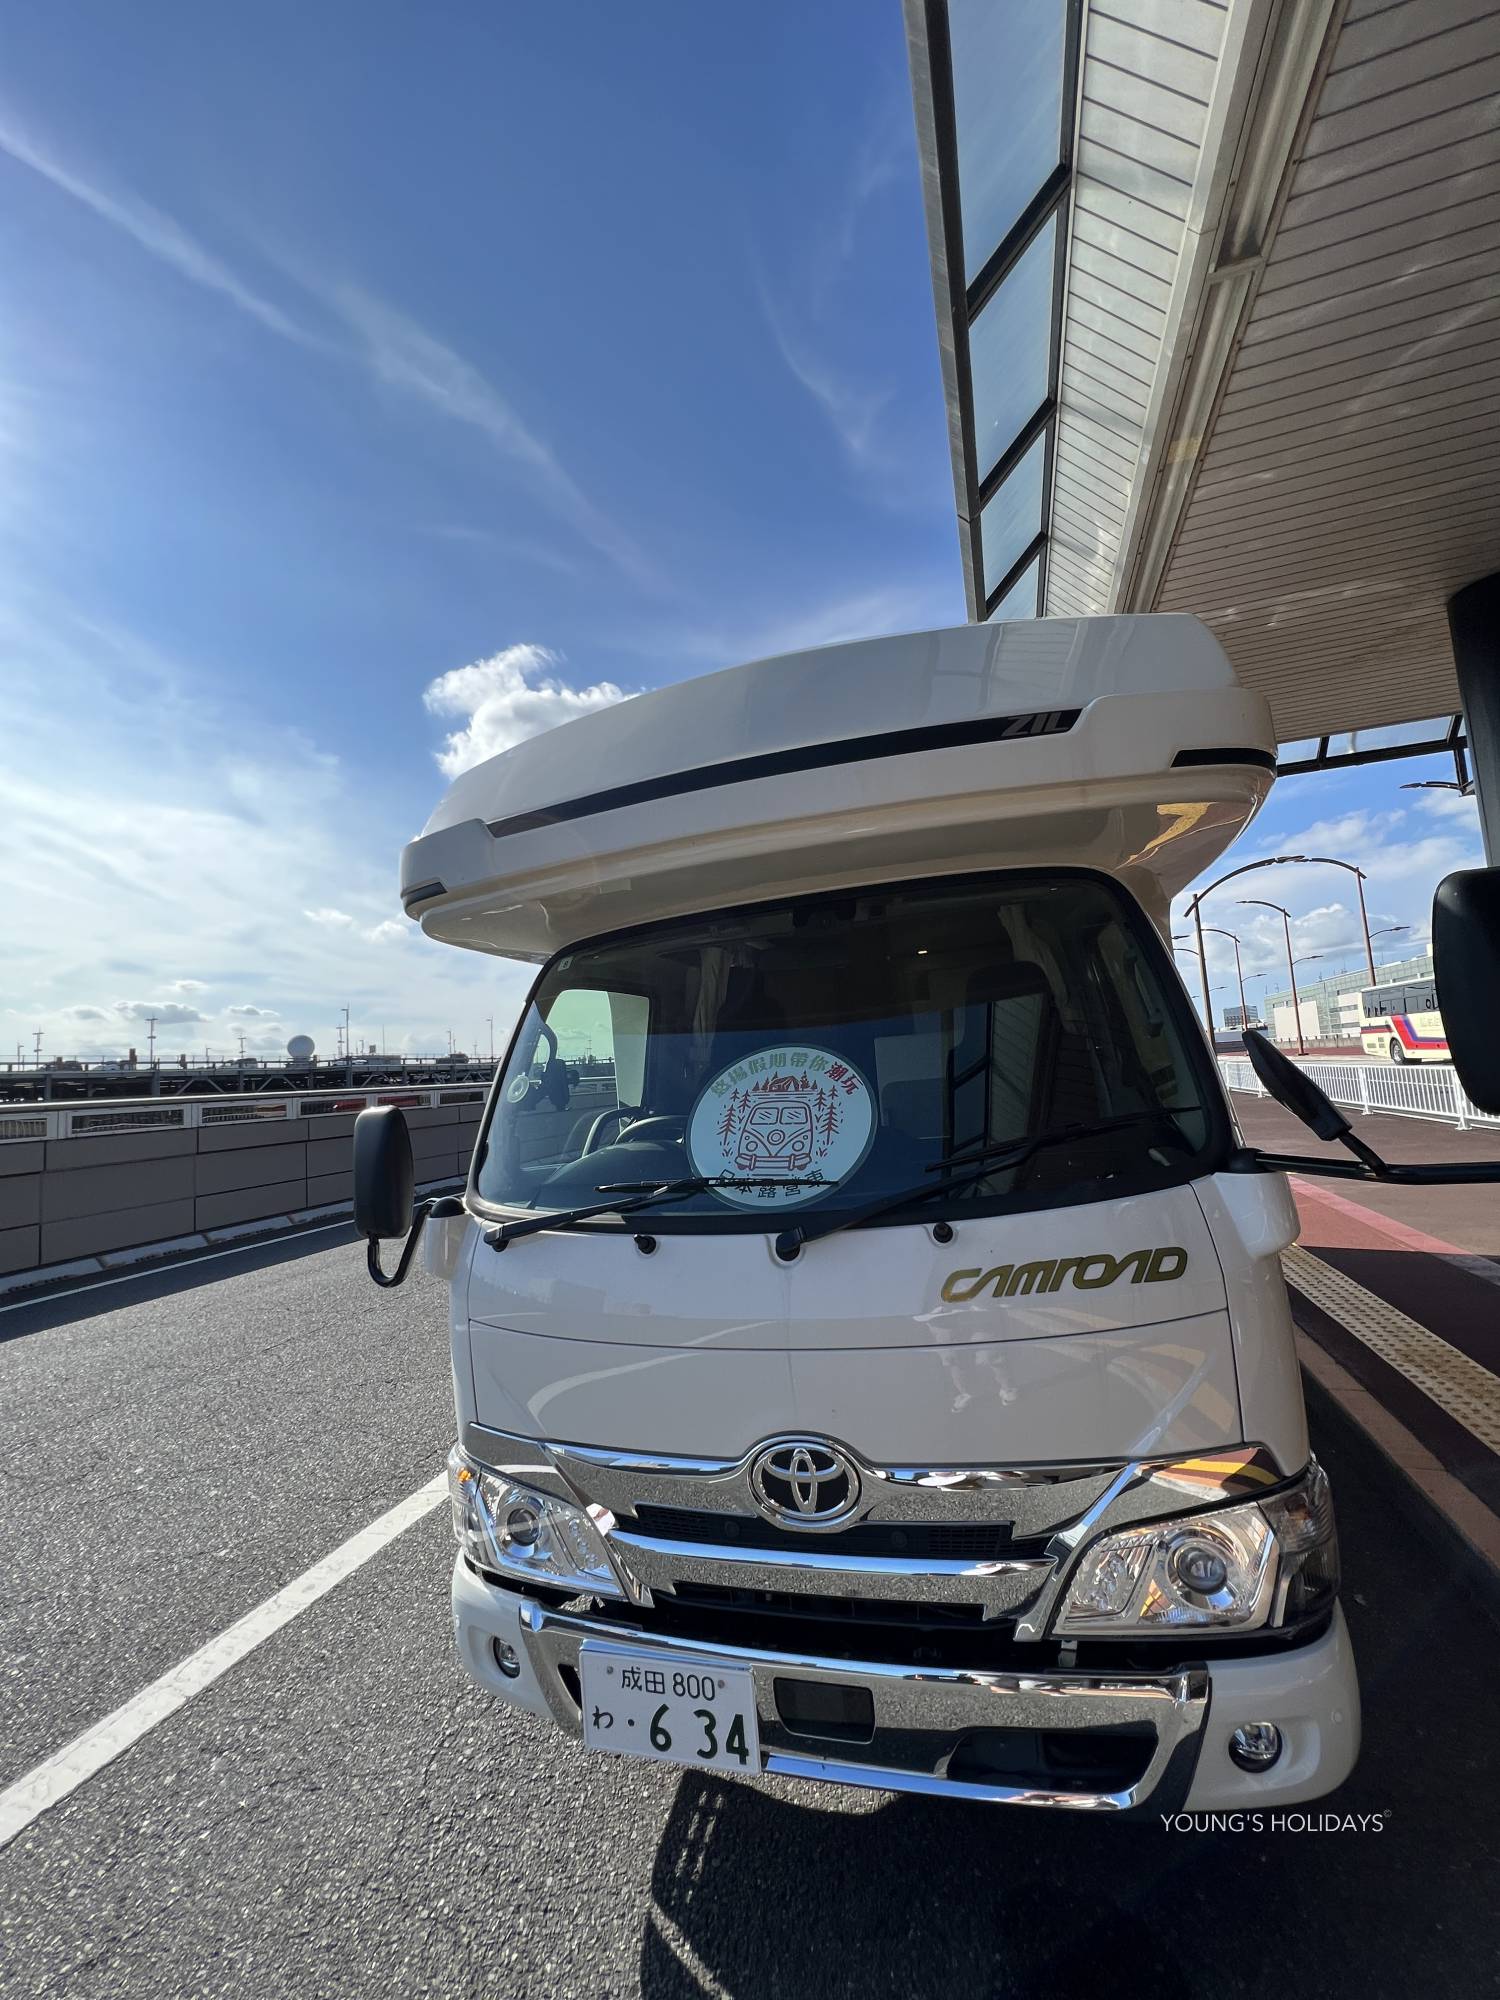 Young's Holidays 【Tokyo】Japan 5ppl RV Caravan 24 hours Rental Experience 16